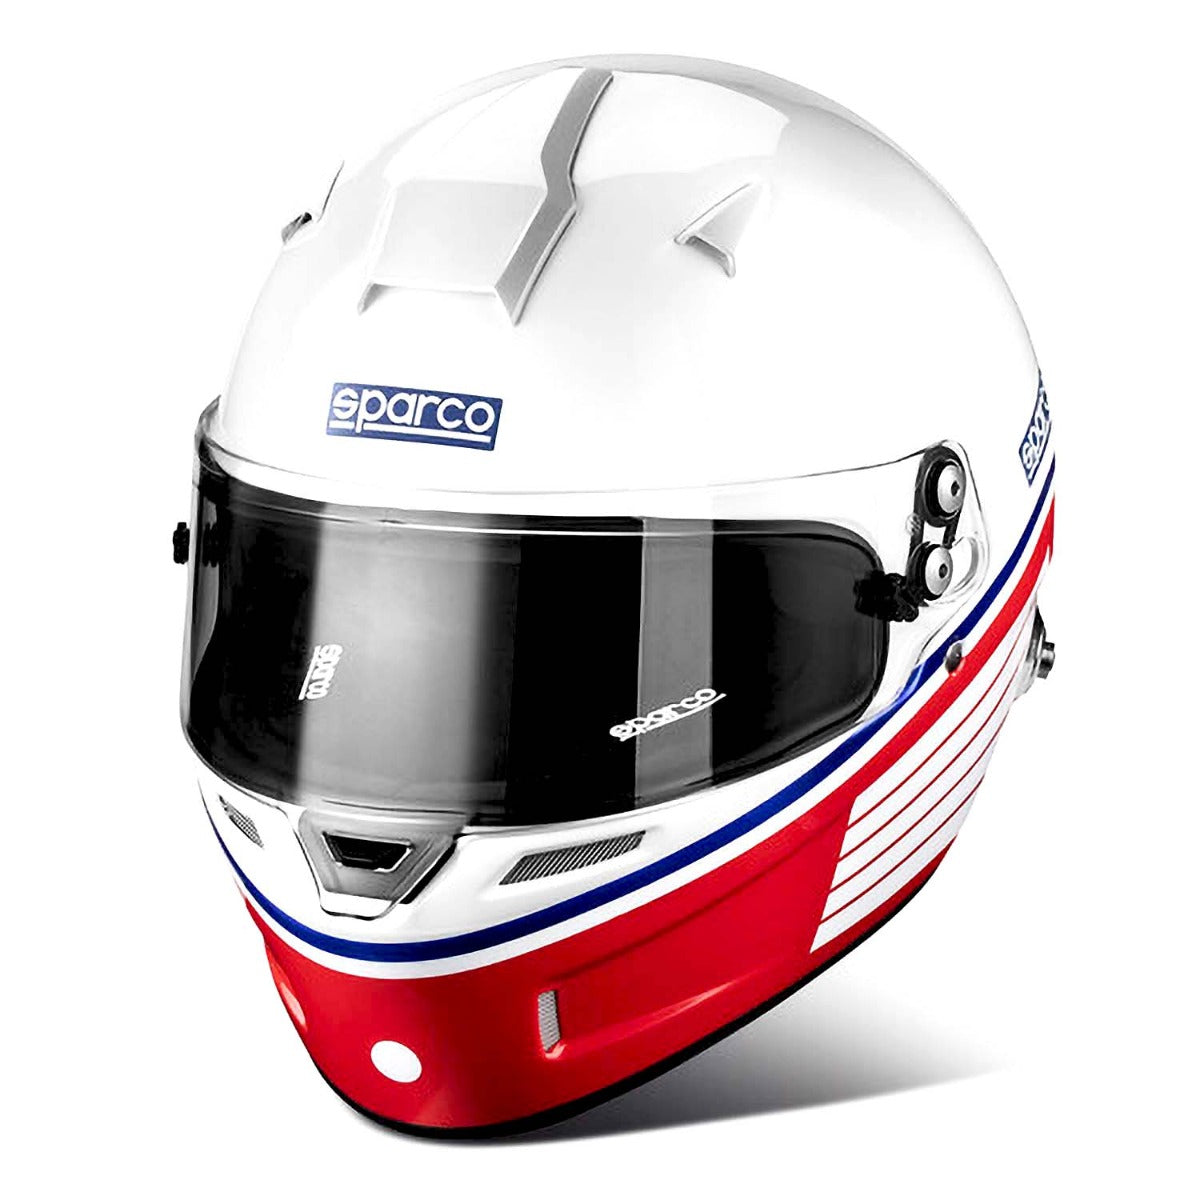 Martini Racing Clothing, Martini Racing Helmets